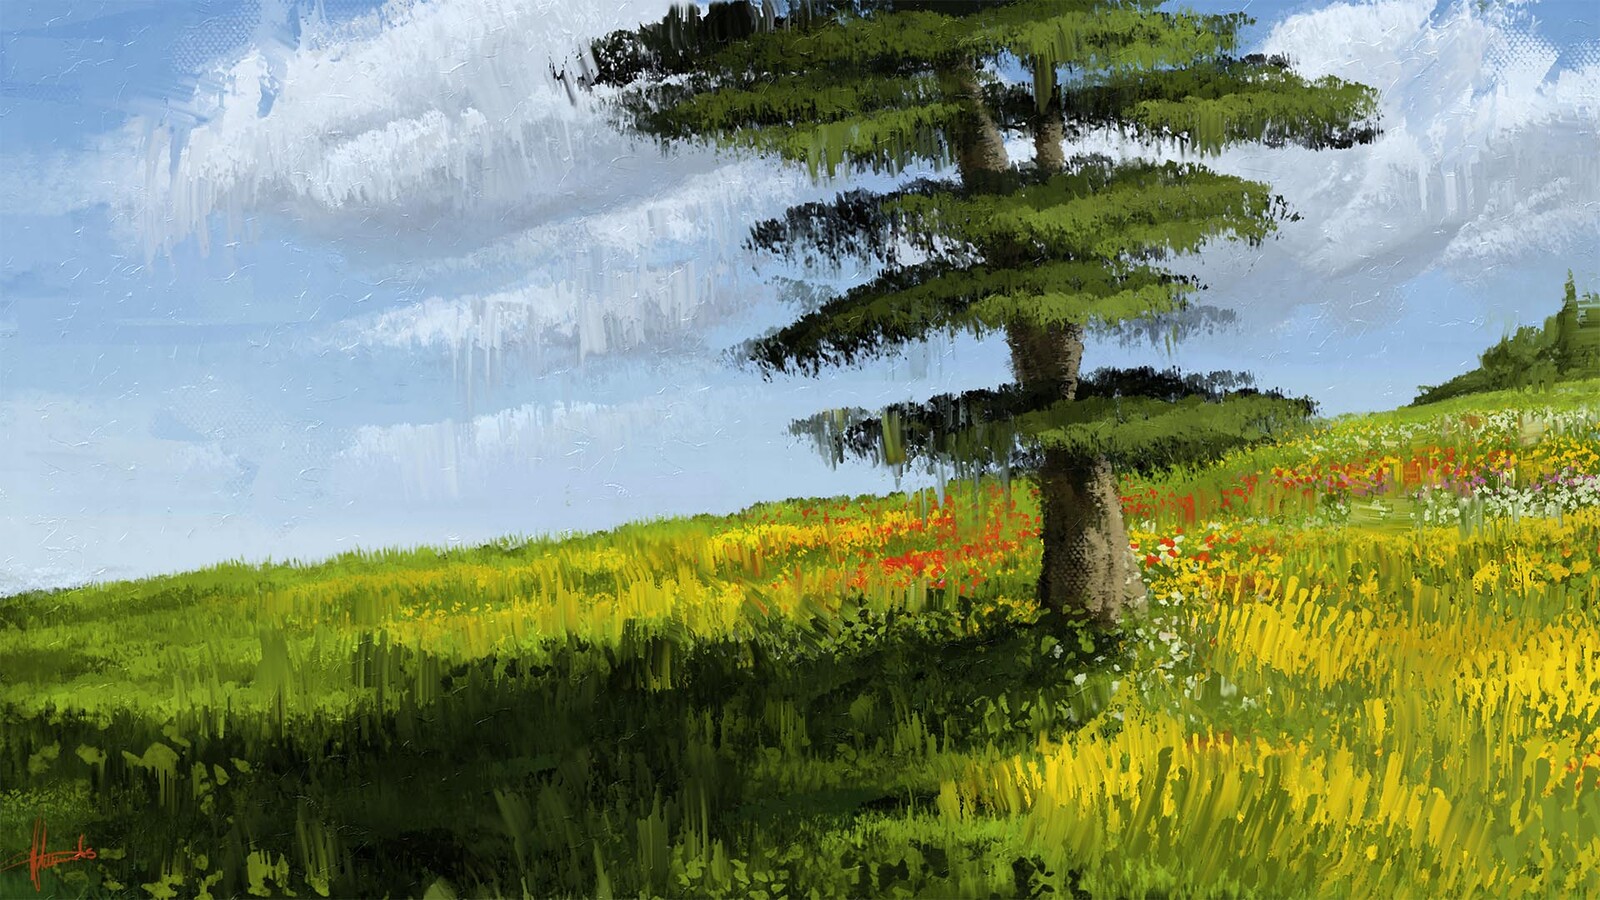 Digital Landscape / Scenery Painting (Nature Wallpaper)